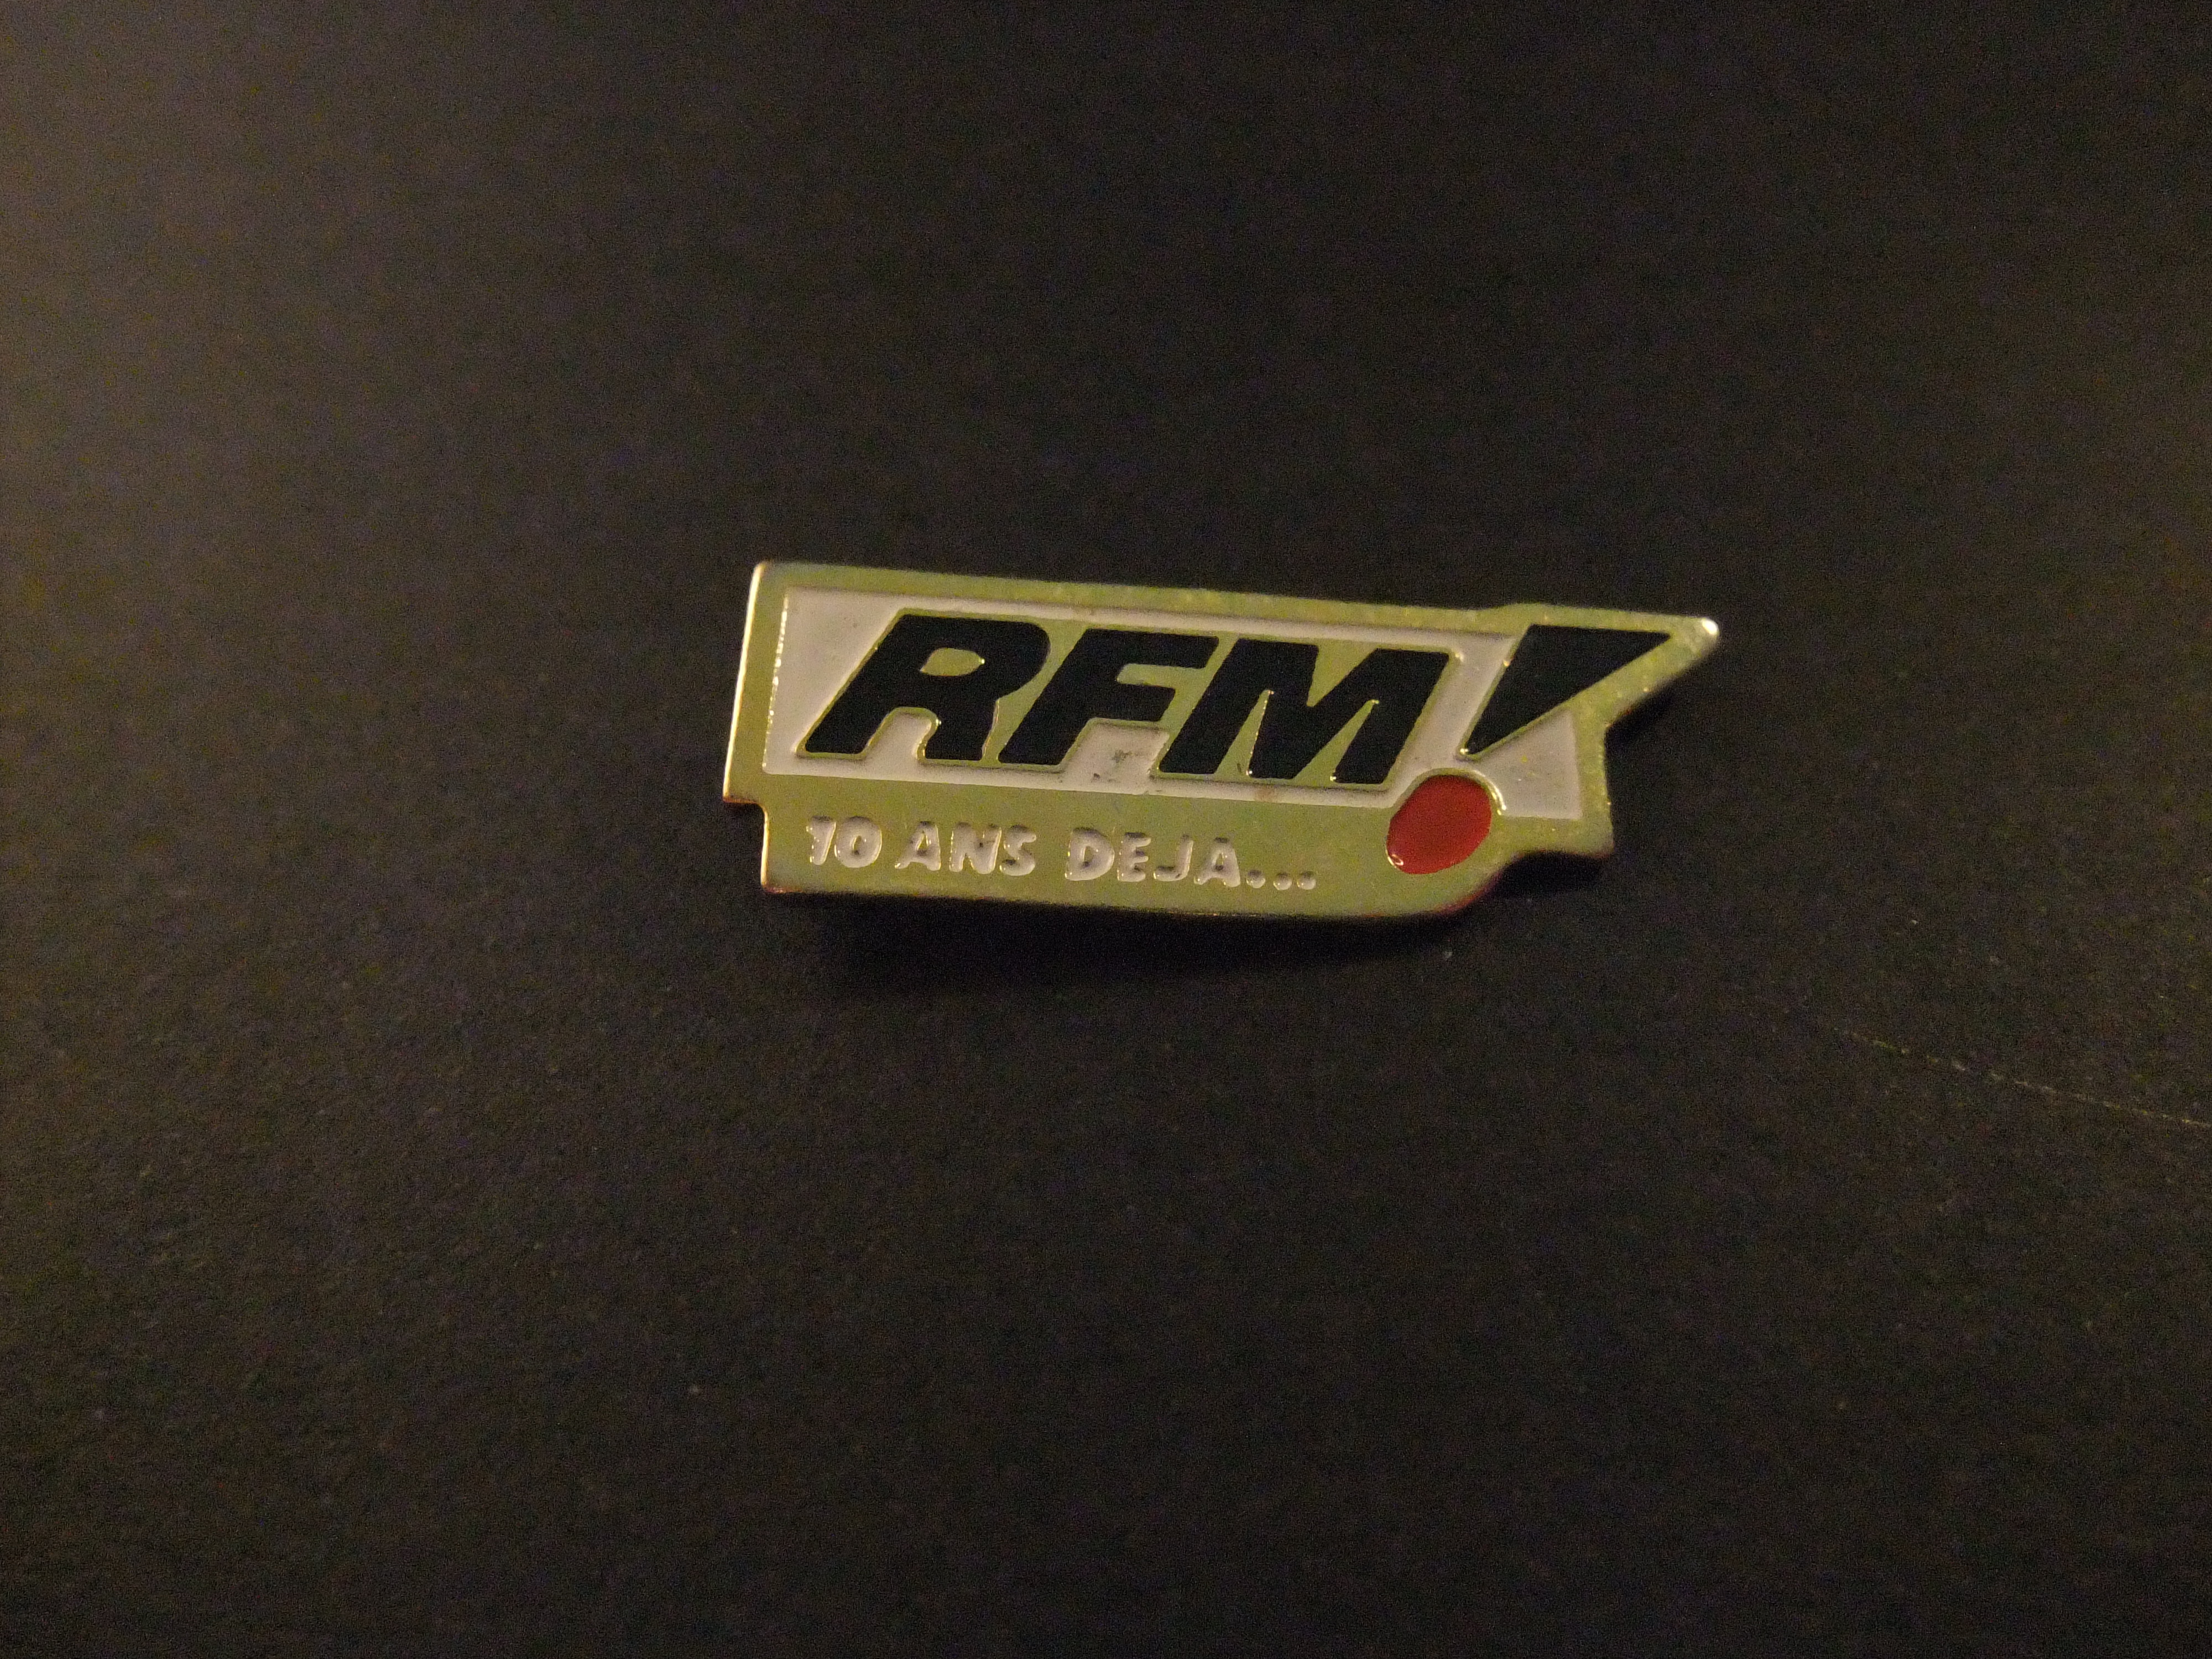 RFM Frans commercieel, nationaal radiostation